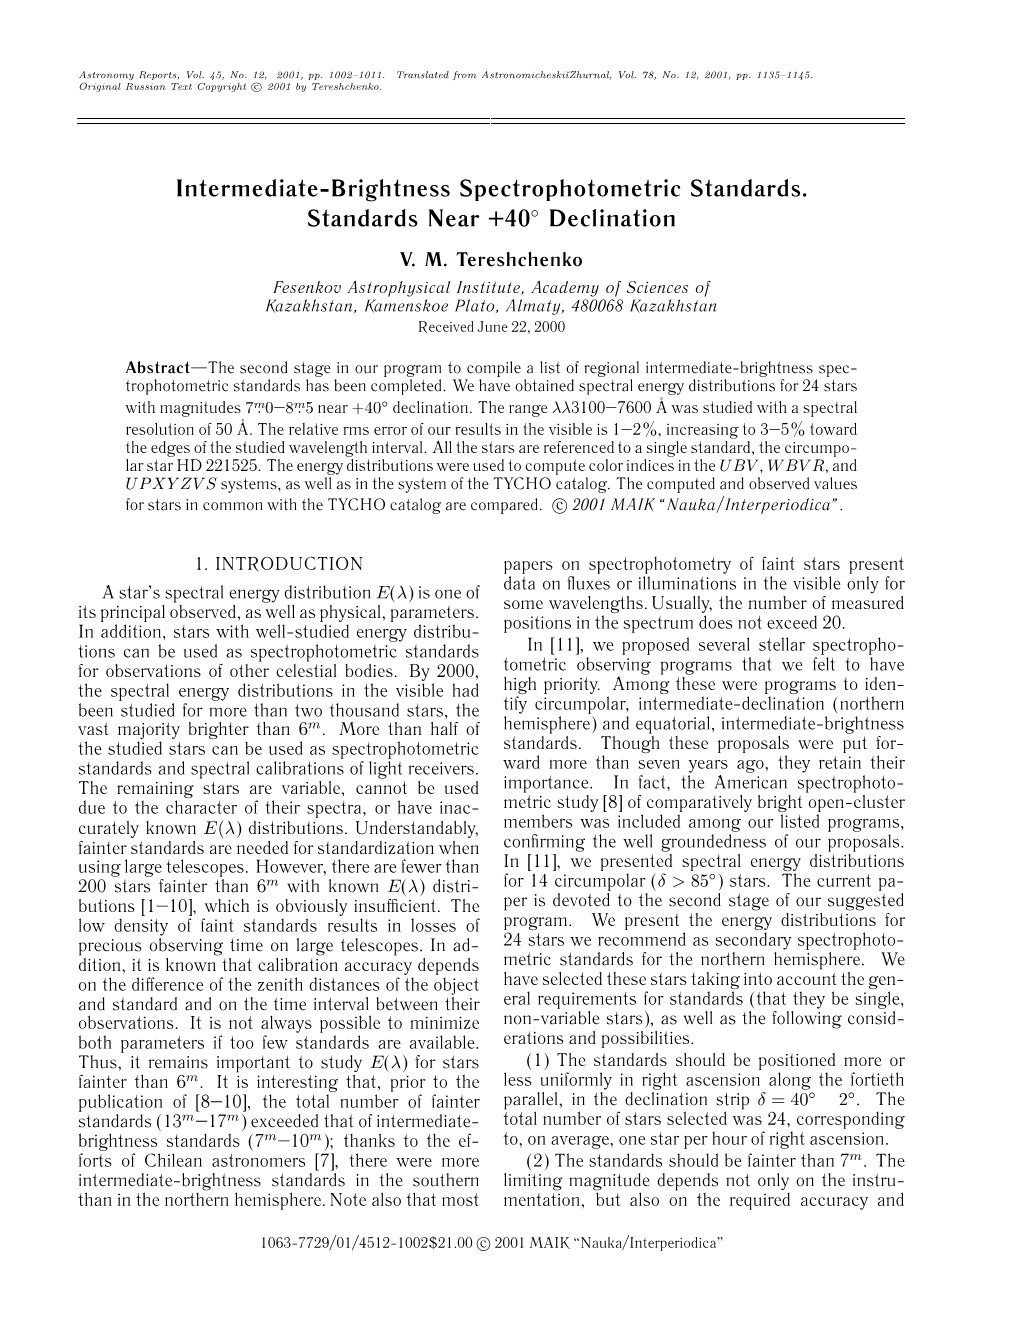 Intermediate-Brightness Spectrophotometric Standards. Standards Near +40 Declination